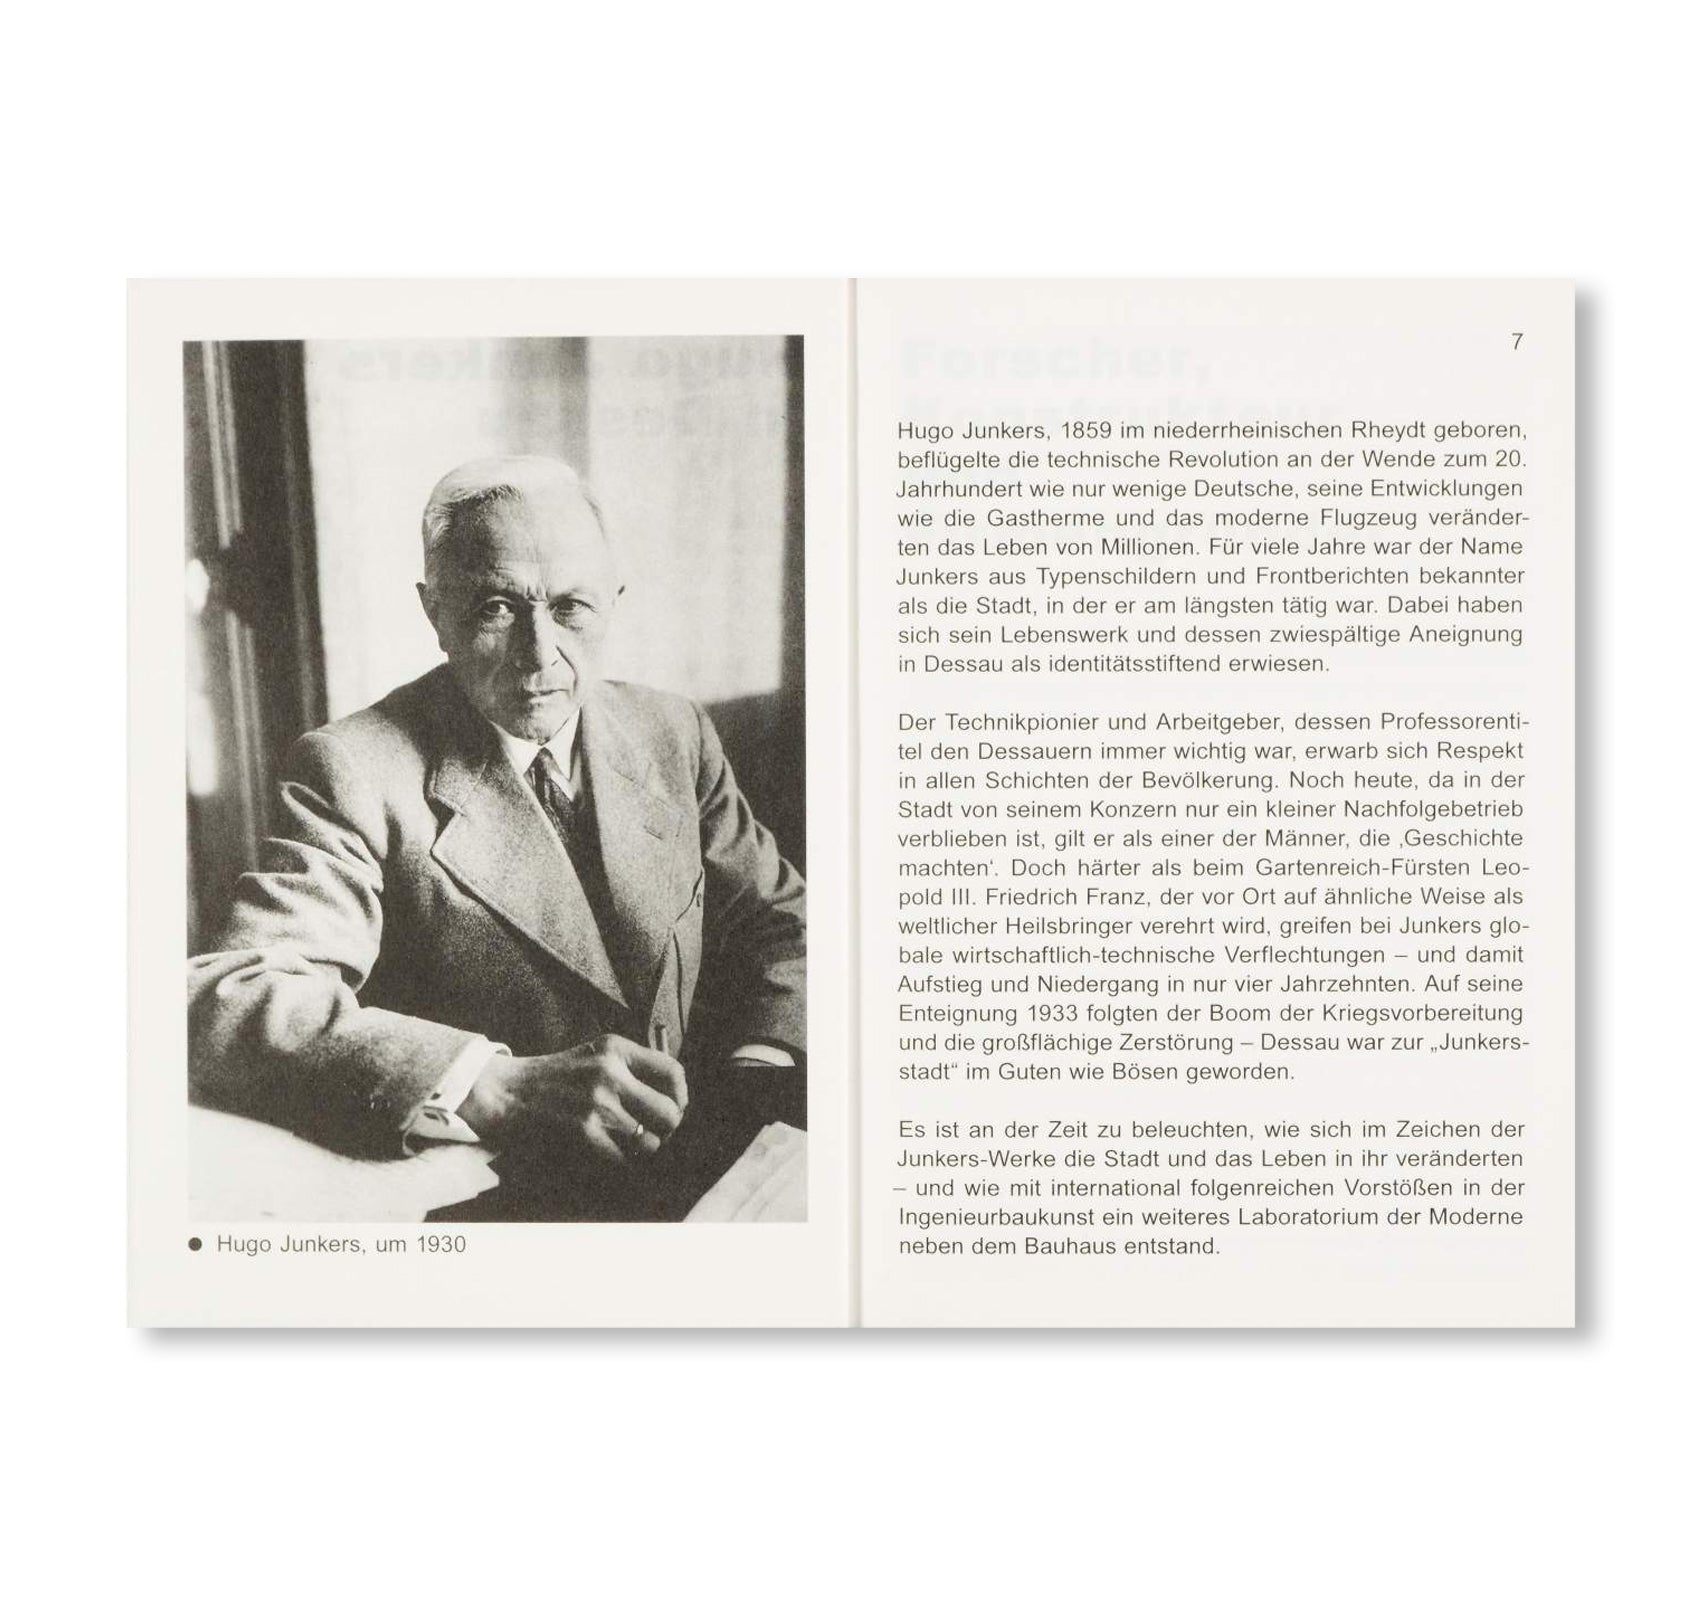 JUNKERS BAUT. EINE SPURENSUCHE - Bauhaus Paperback 13 by Sven Tornack, Andreas Butter, Stiftung Bauhaus Dessau [GERMAN EDITION]